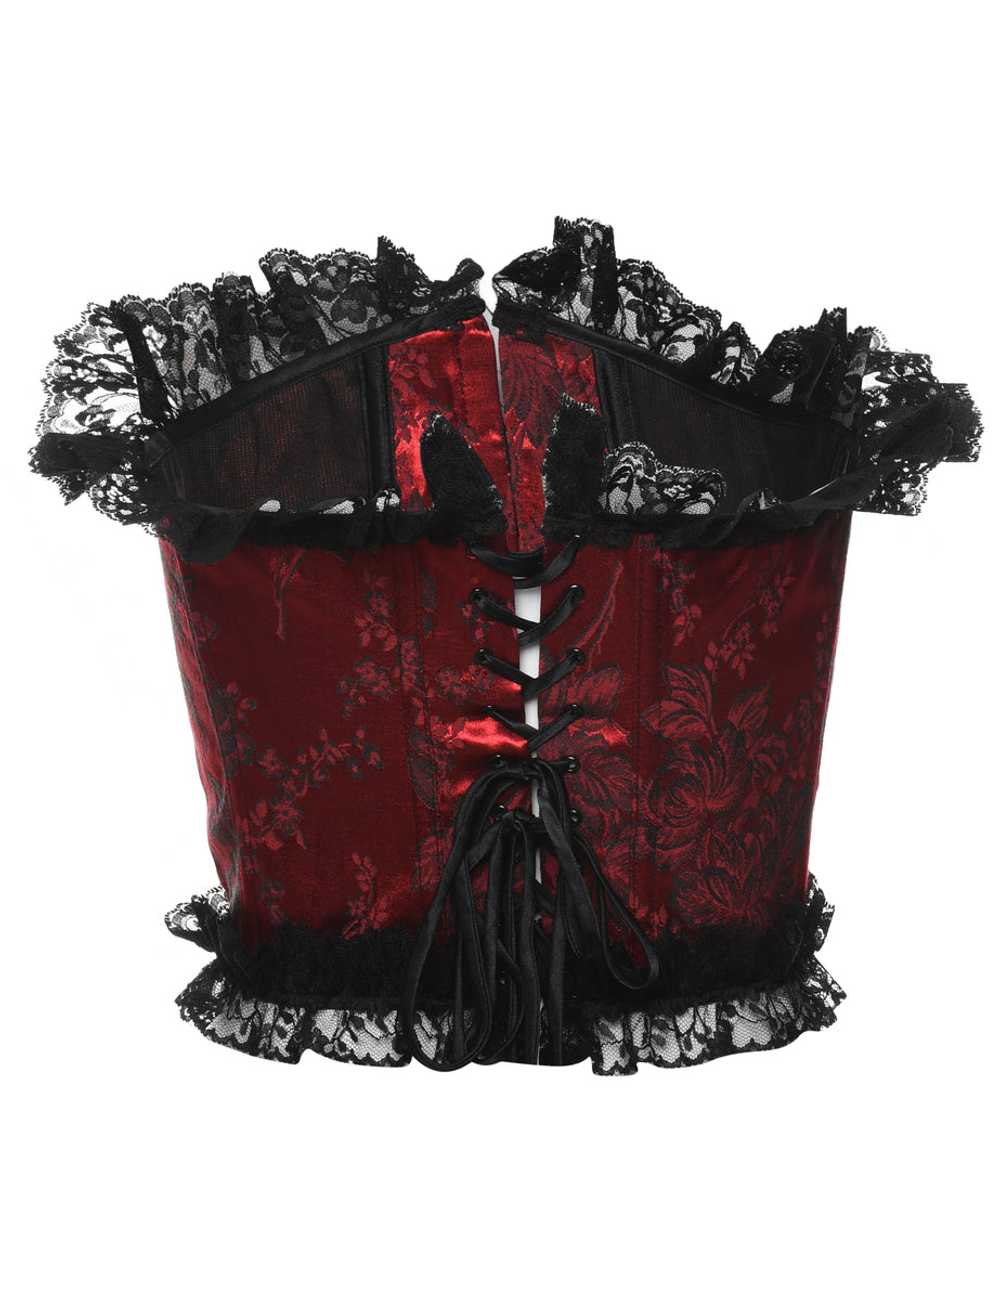 Black & Red Floral Lace Boned Corset - S - image 2